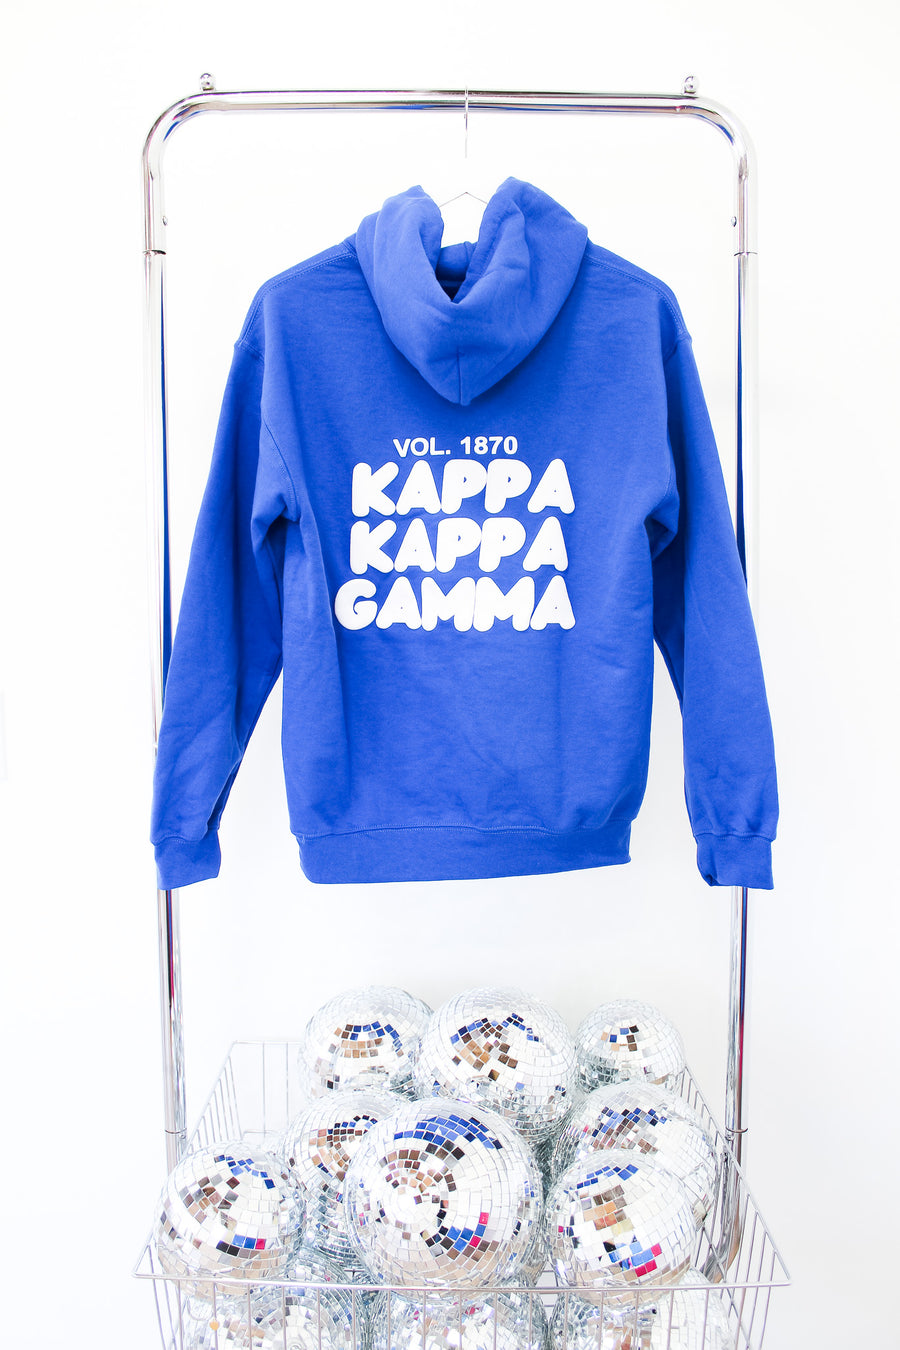 Kappa Kappa Gamma Foxy Sweatshirt - SM BLUE